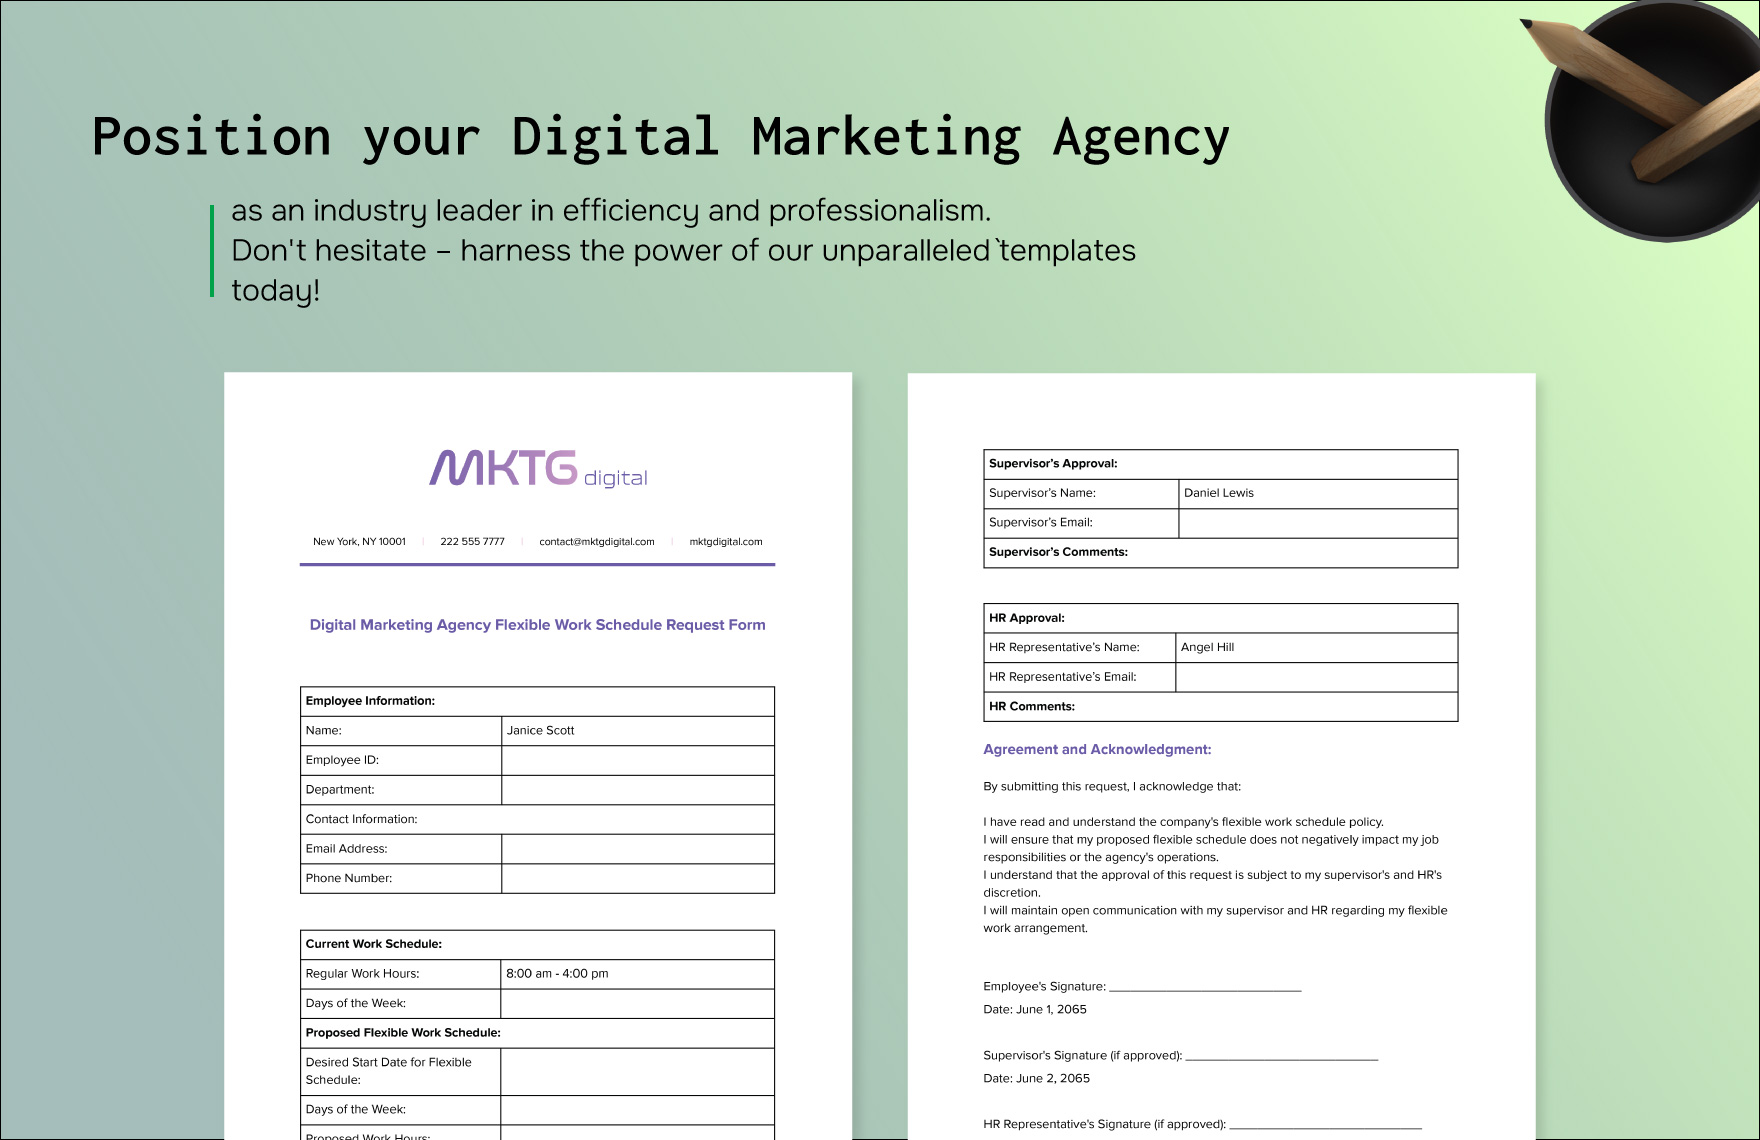 Digital Marketing Agency Flexible Work Schedule Request Form Template